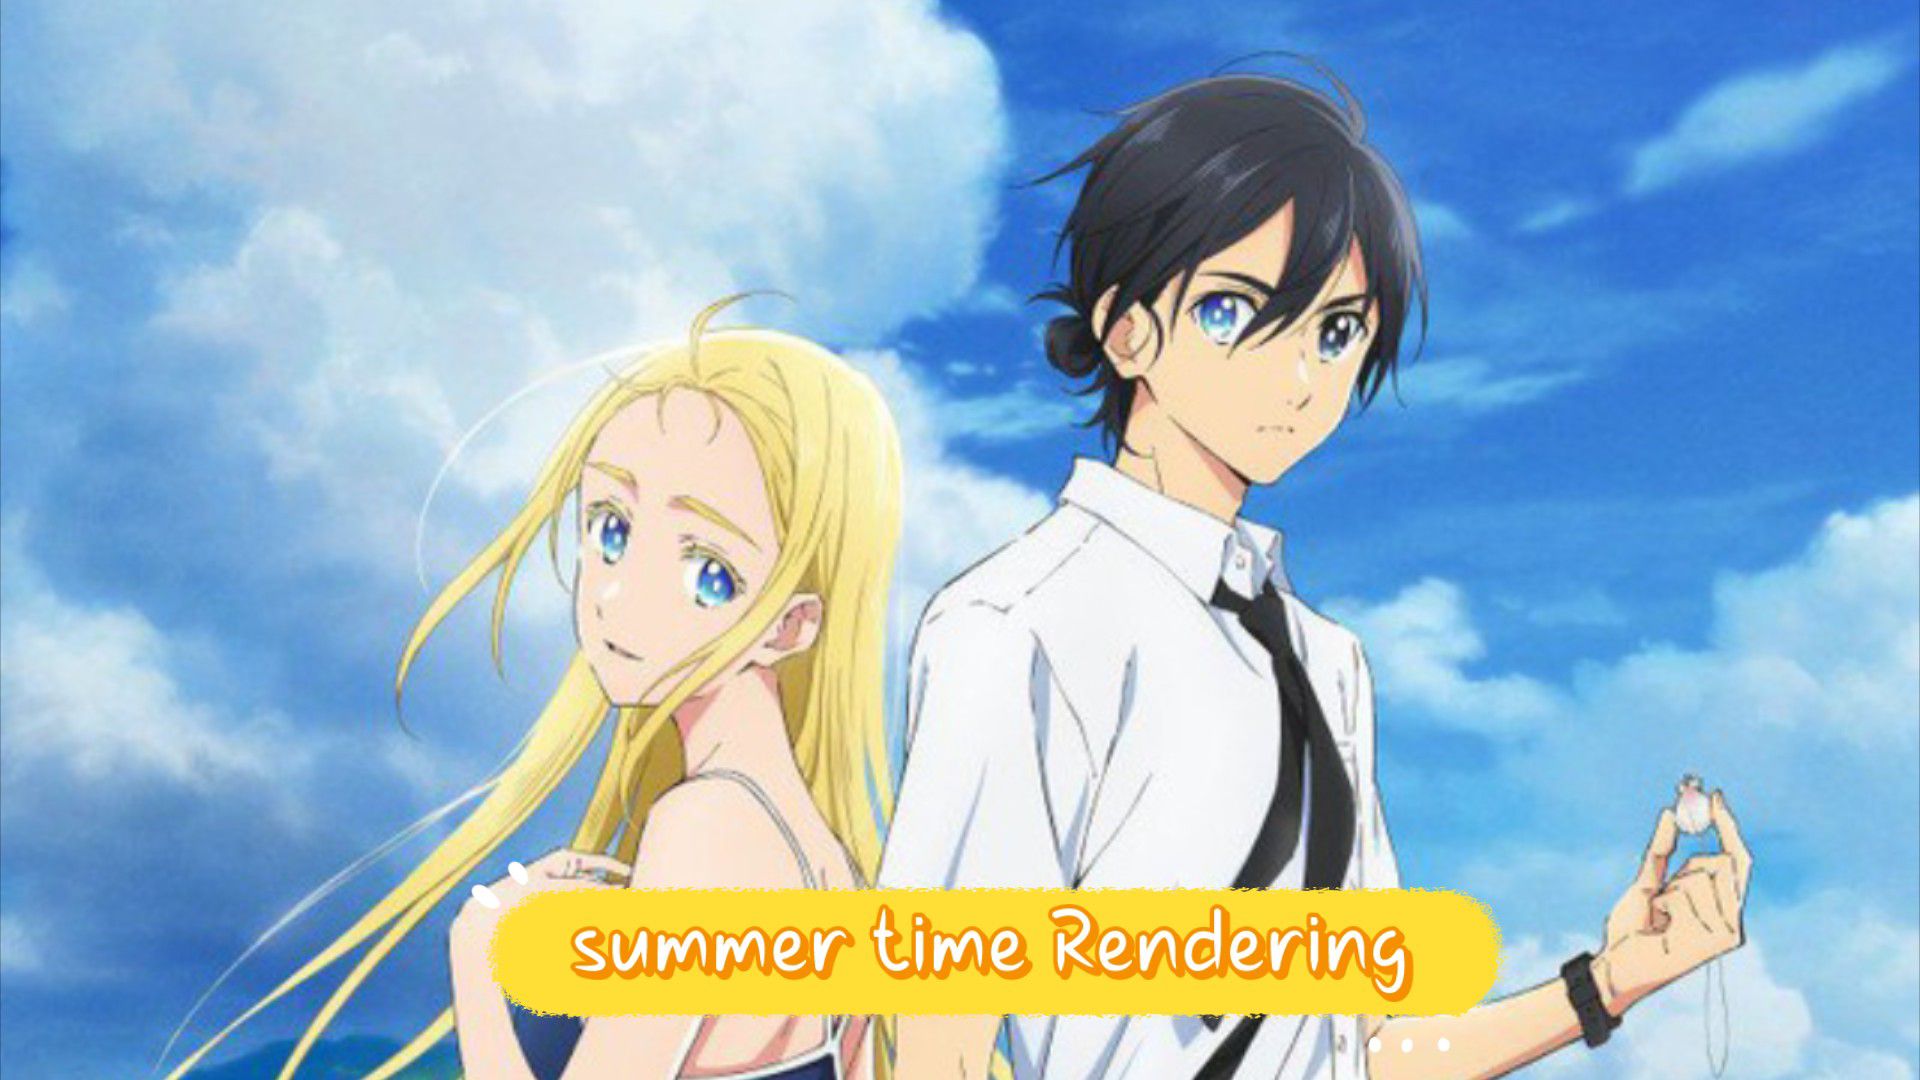 Summertime Render Episode 14 Subtitle Indonesia - SOKUJA